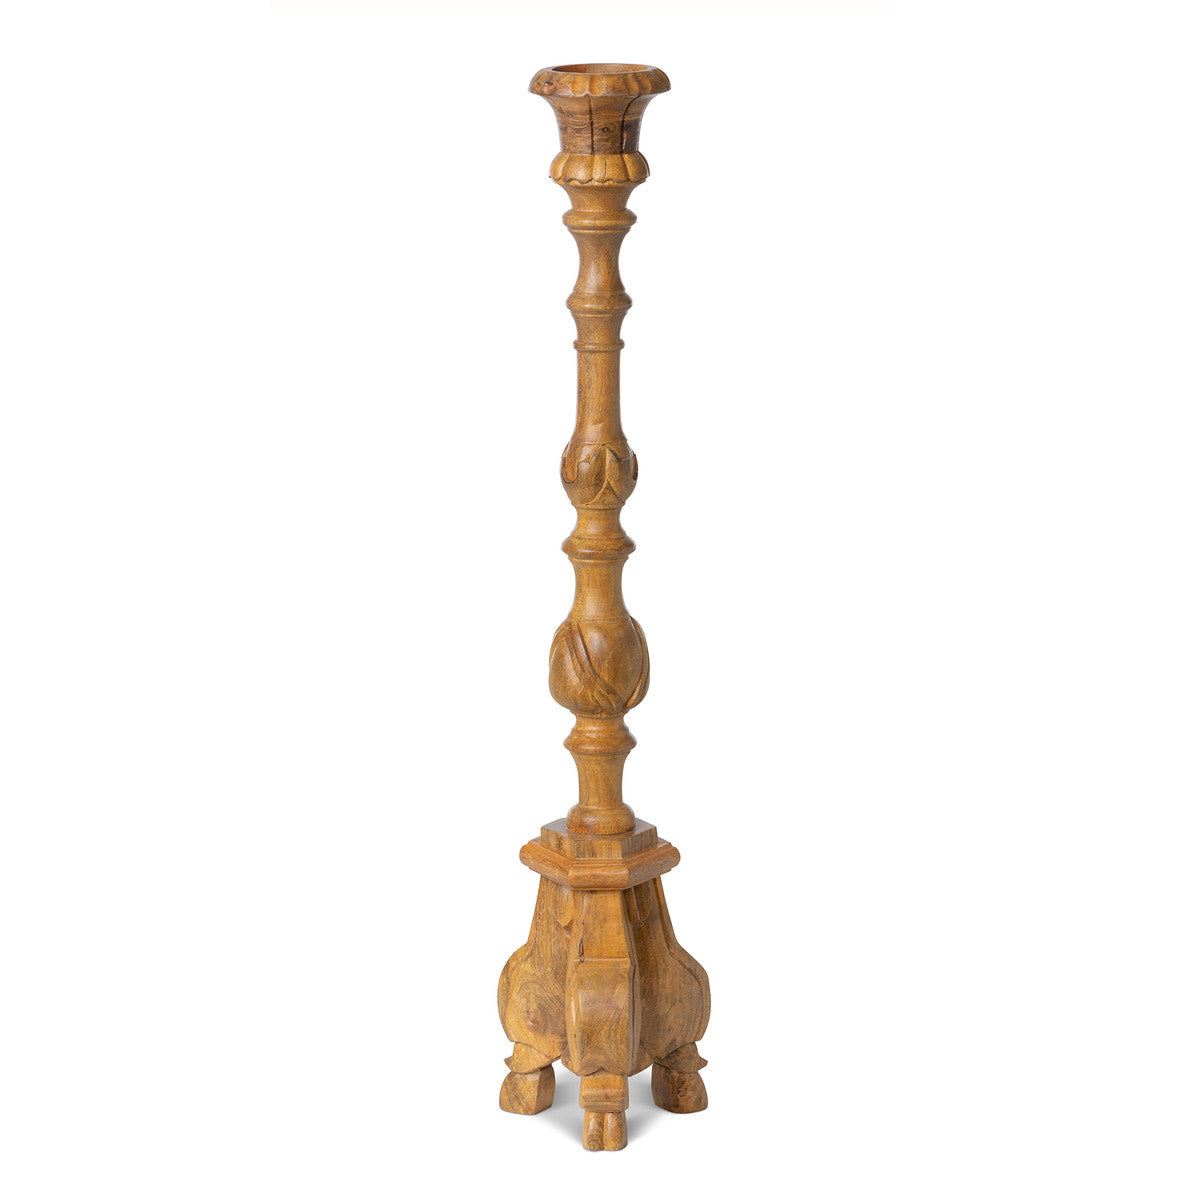 Carved Wood Pillar Candle Holder